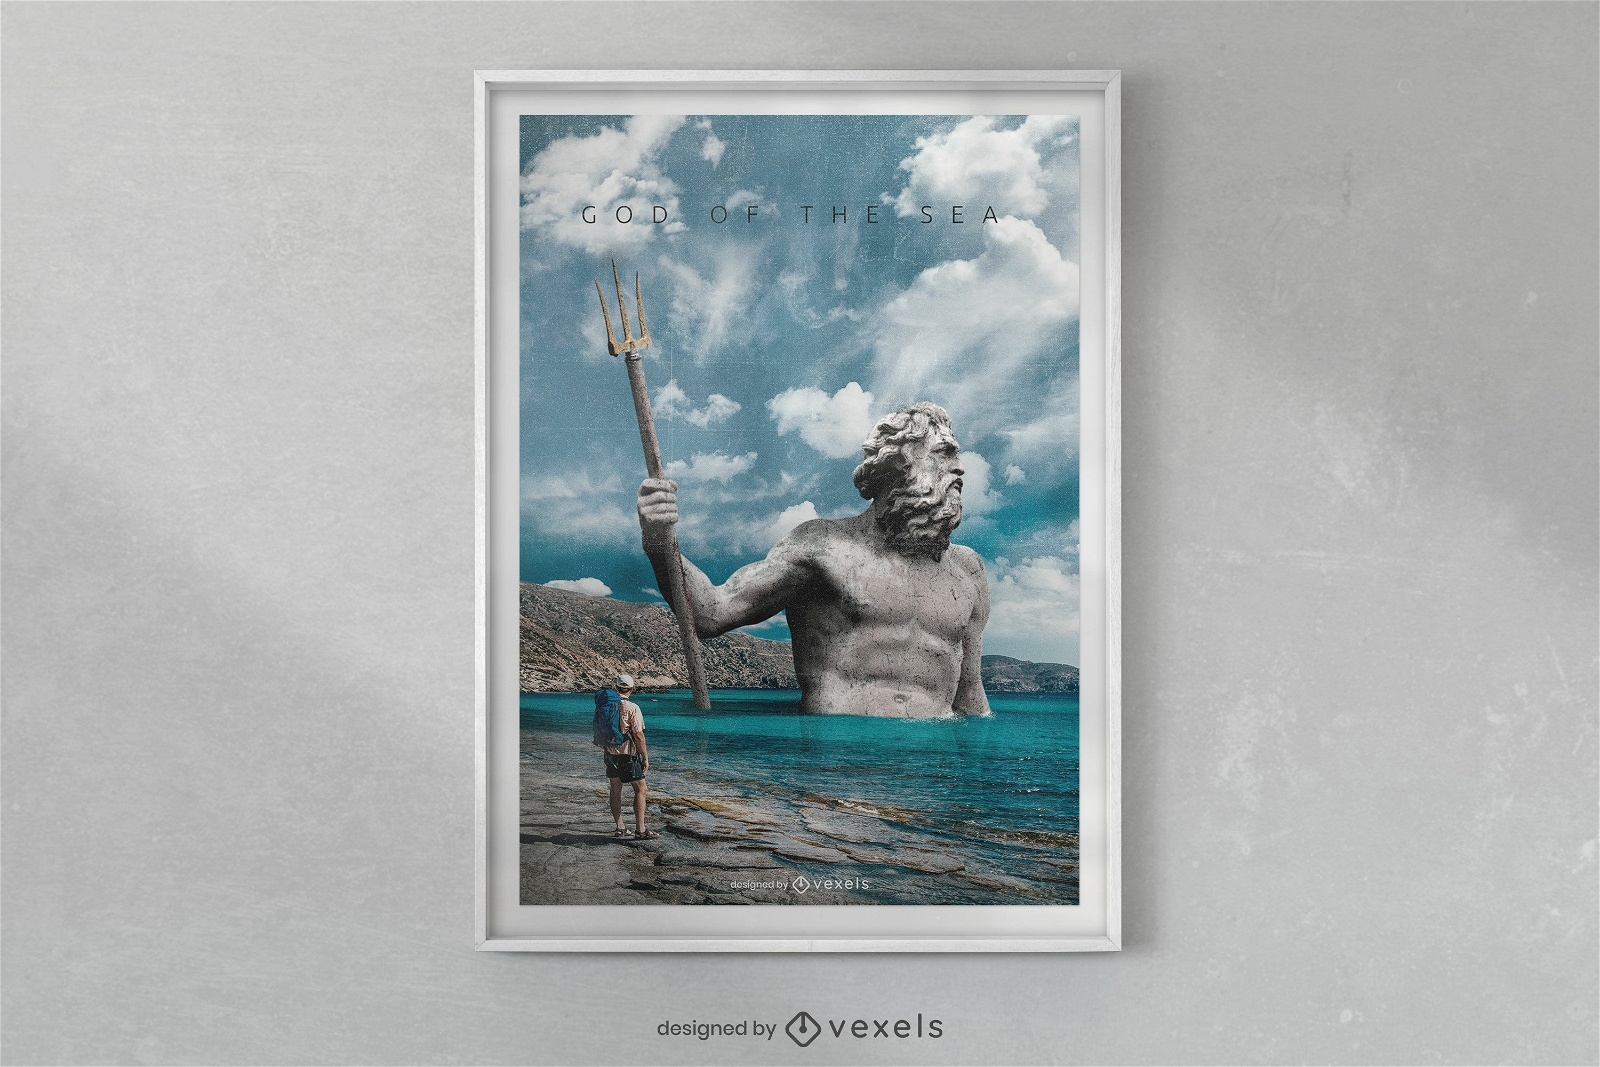 Poseidon-Statue auf Ozeanplakatschablone